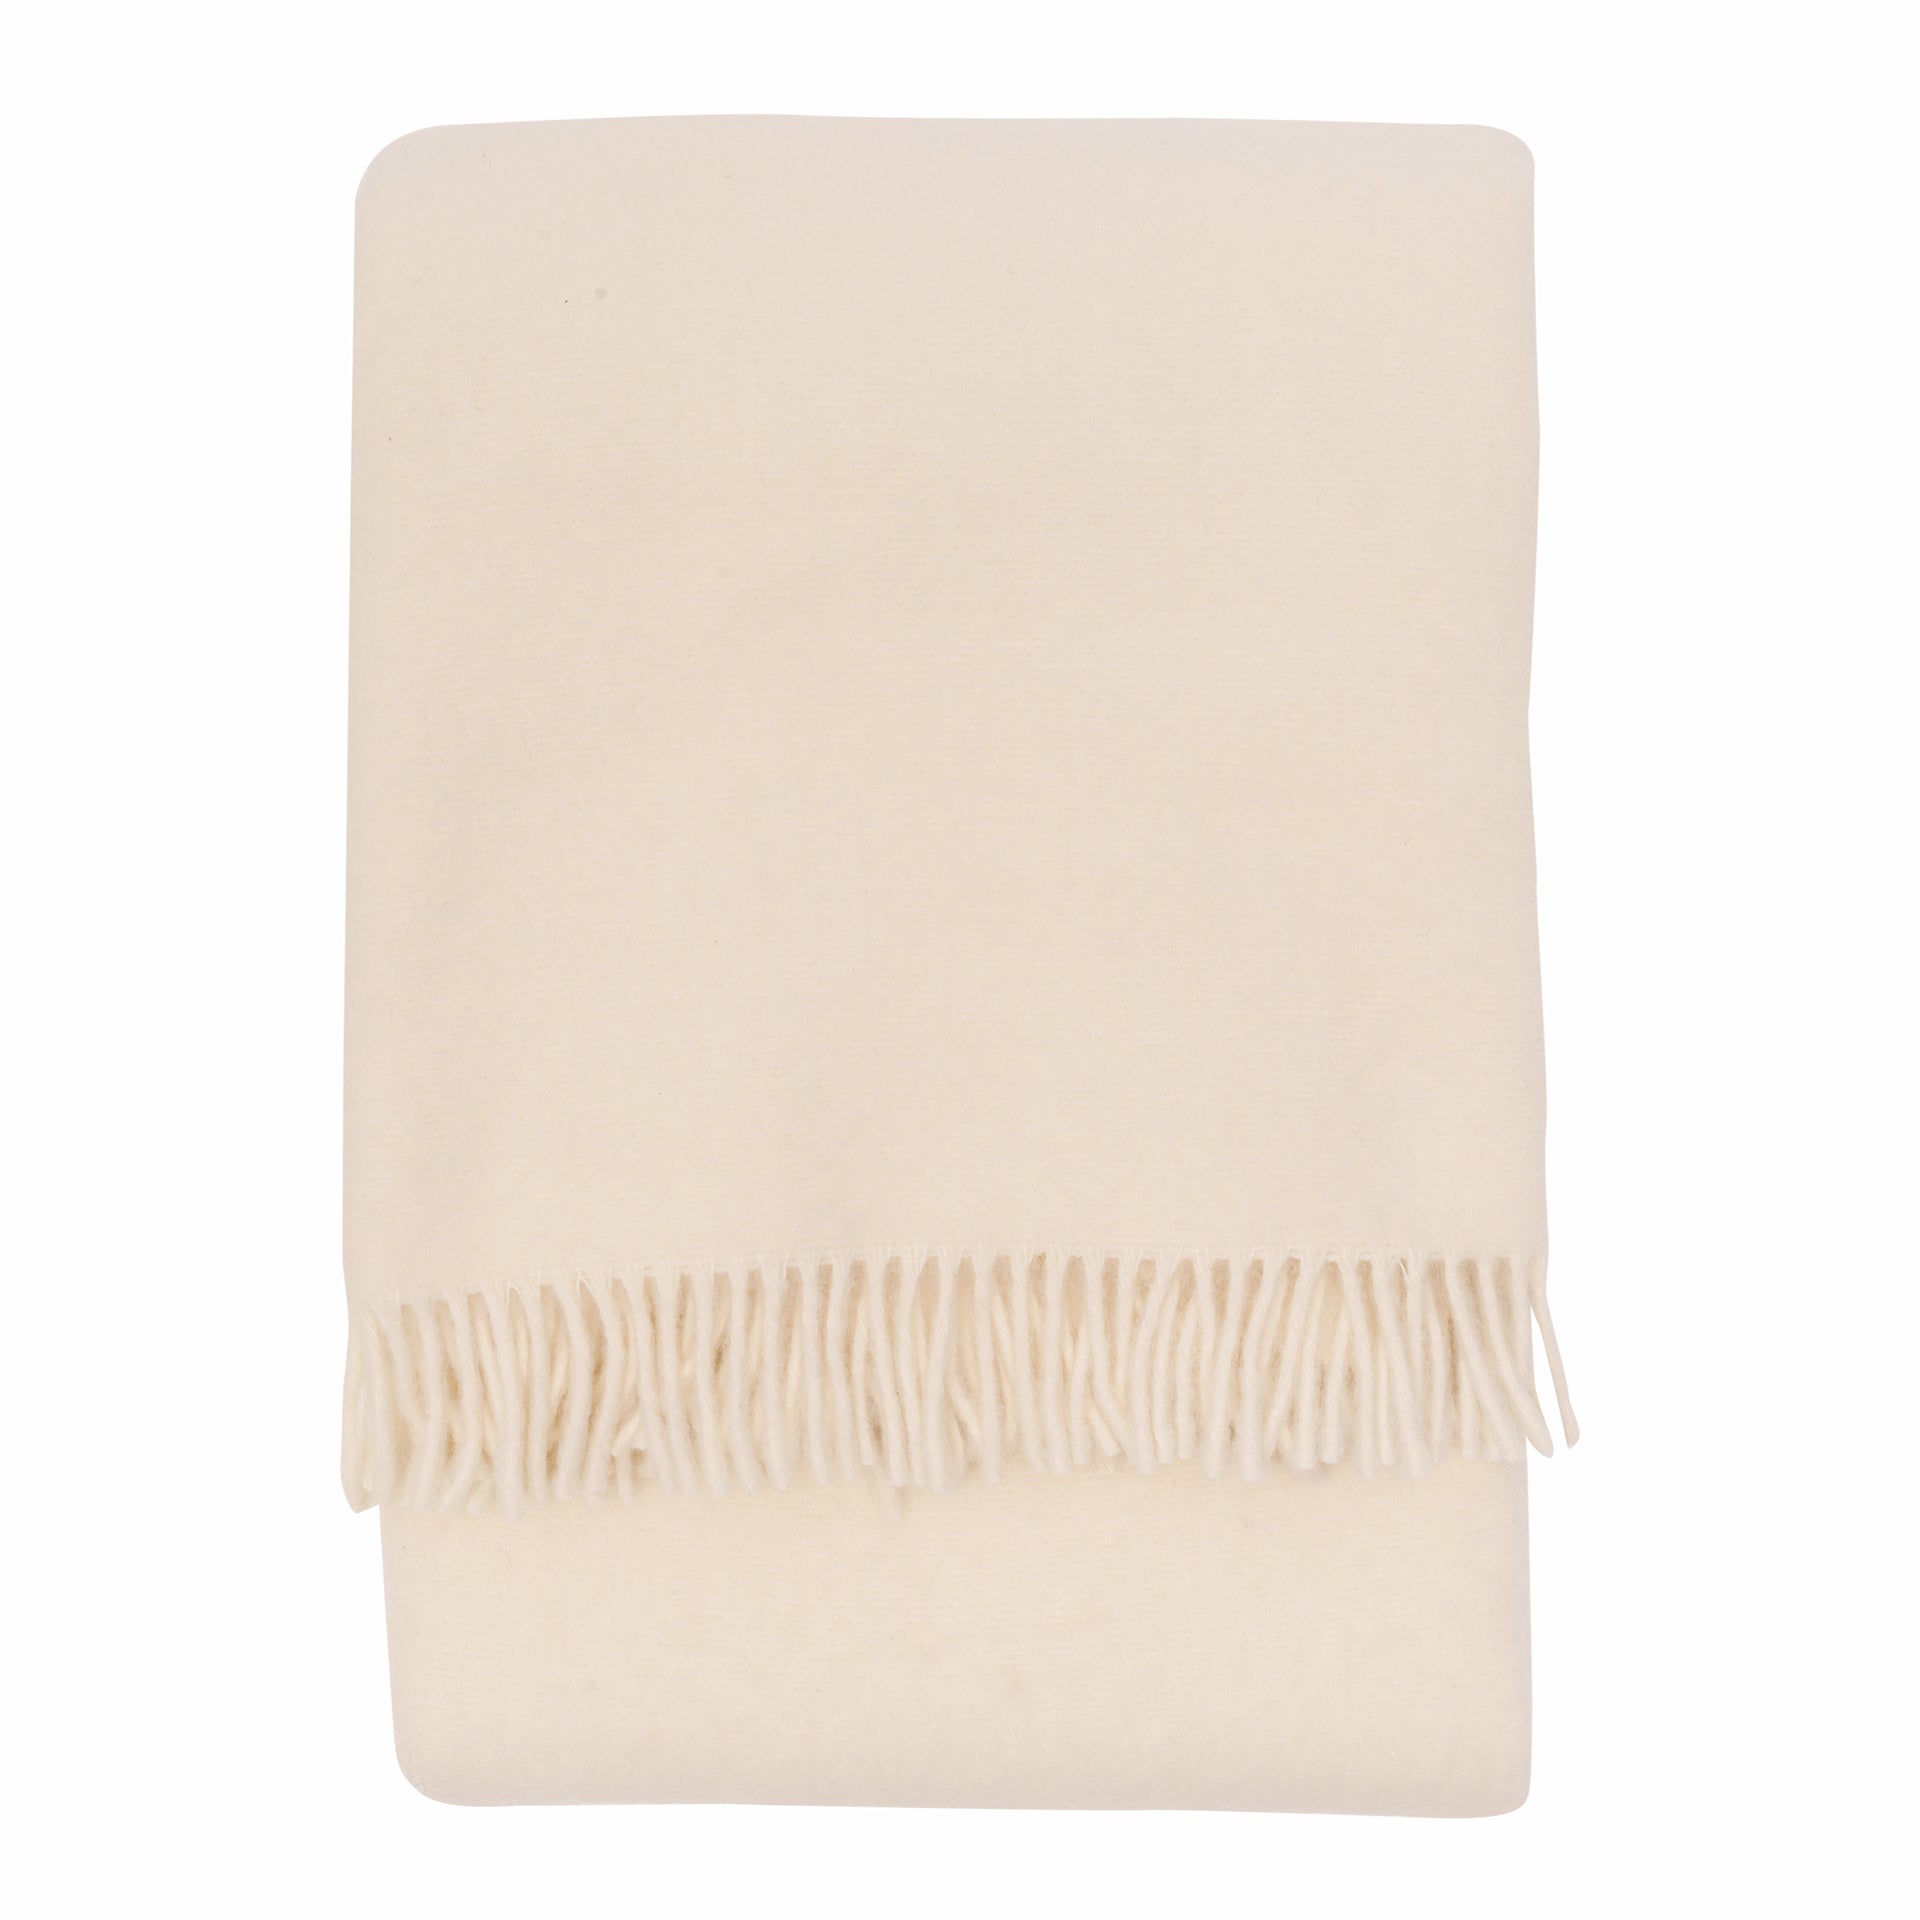 Heavy & Thick Wool Throw Blanket - Cream 100% Pure Sheep Wool Blanket